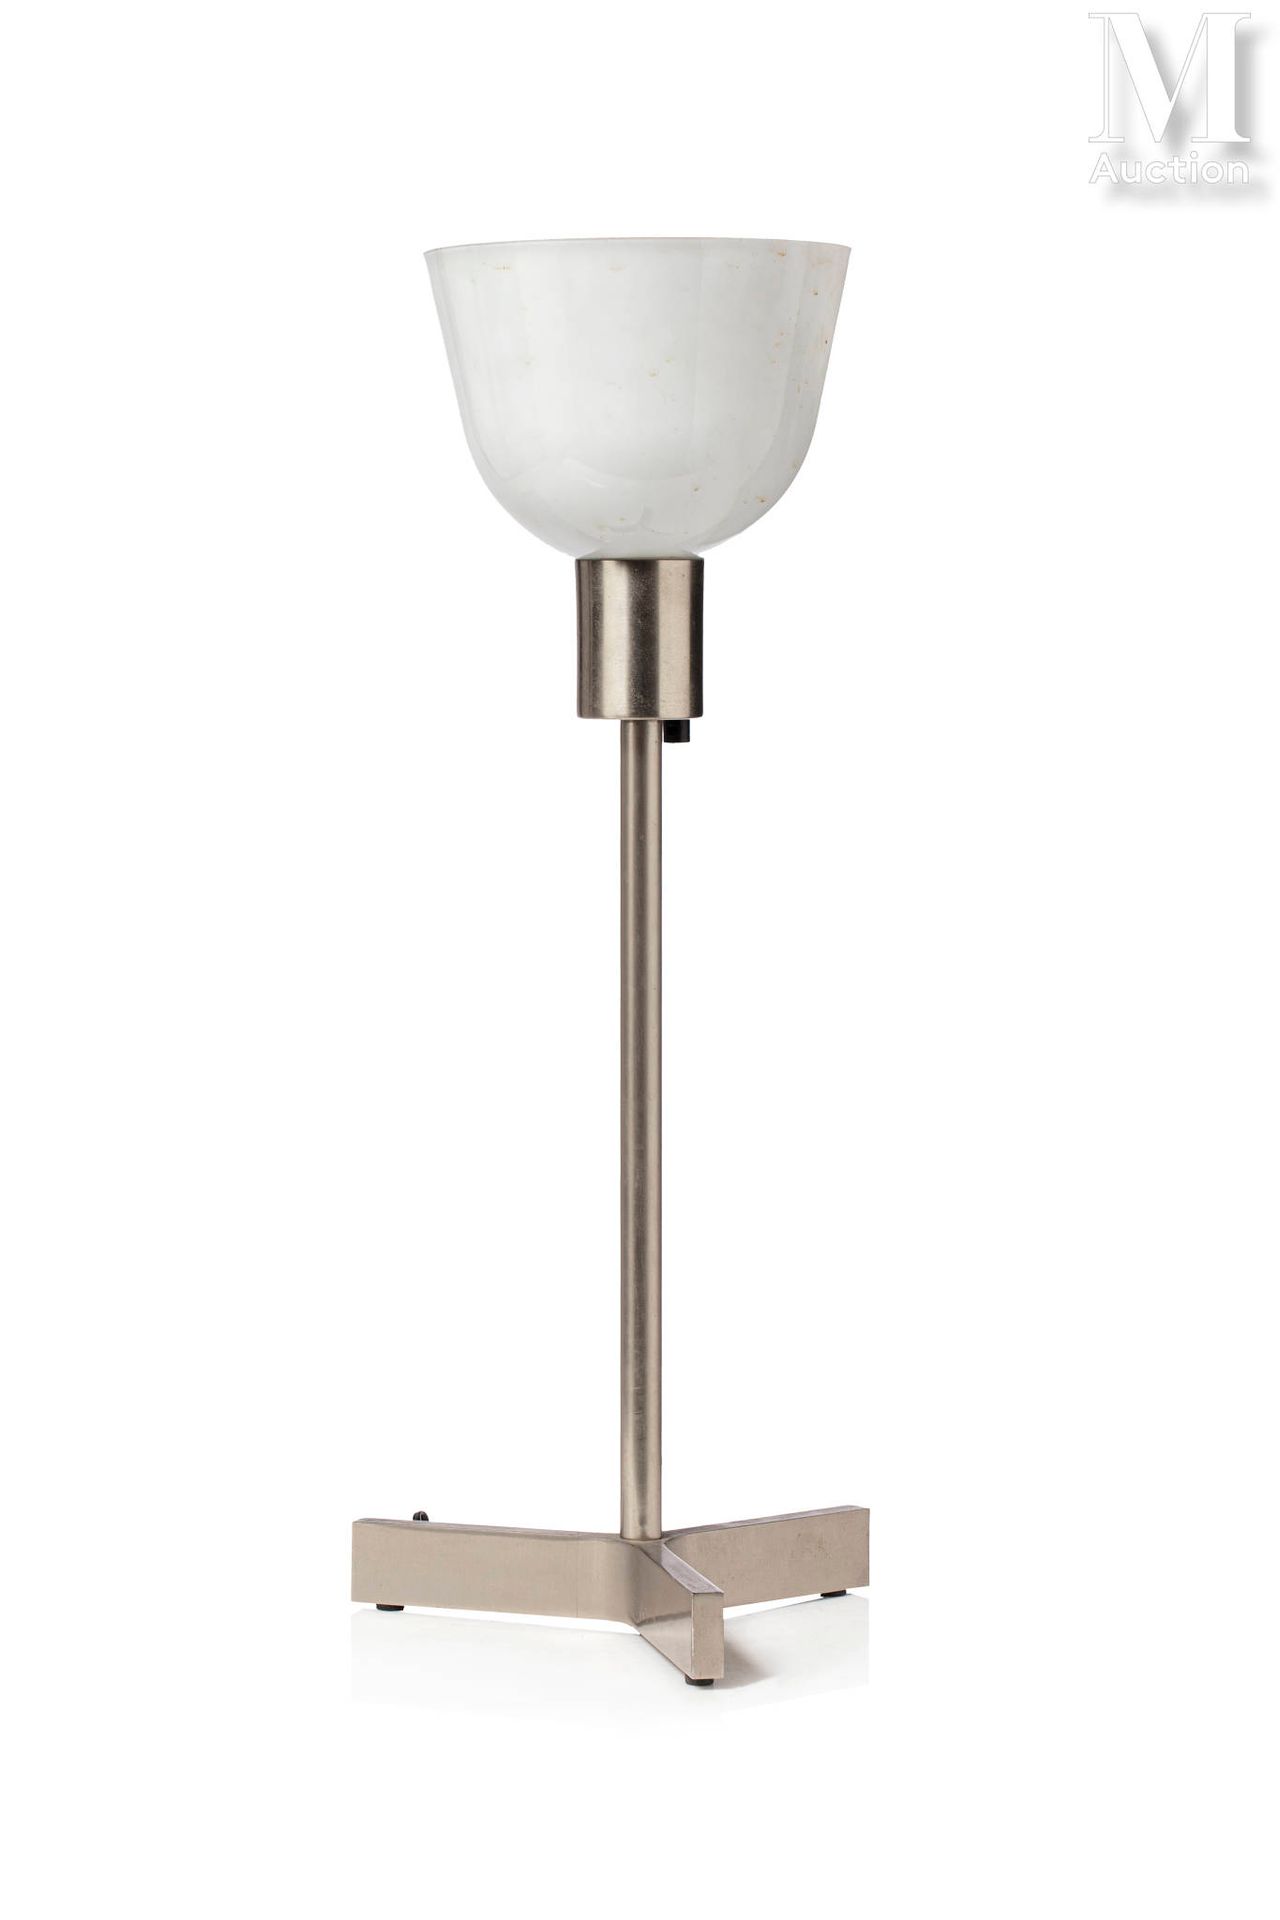 Null Roger FATUS (20th century)

"6111"

Lamp in chromed metal. White opaline gl&hellip;